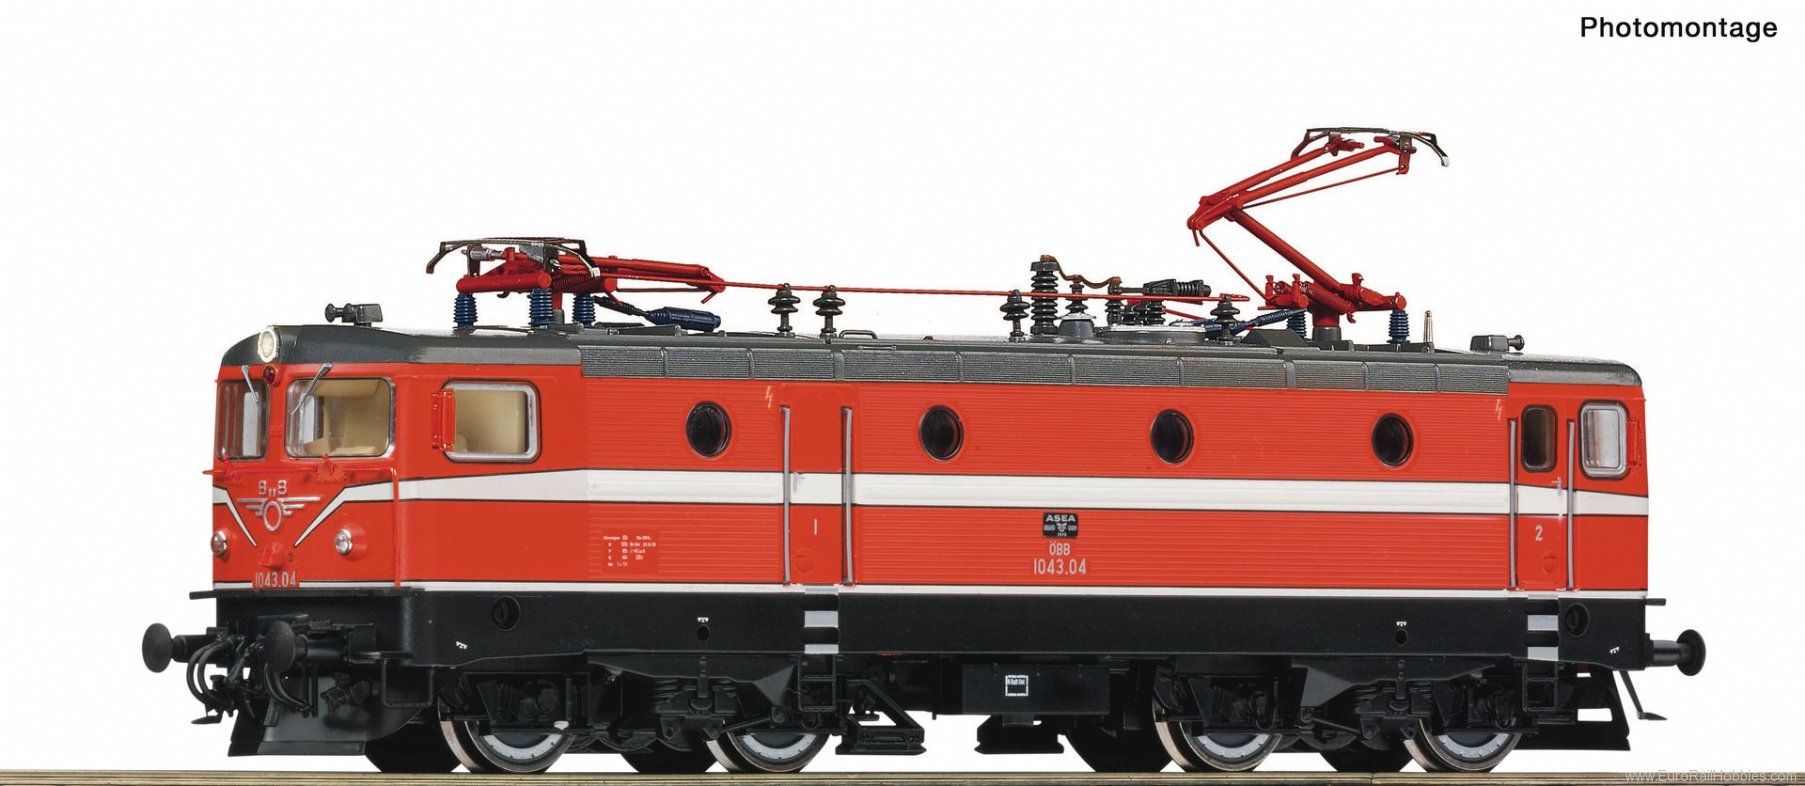 Roco 70453 ÃBB Electric locomotive 1043.04 